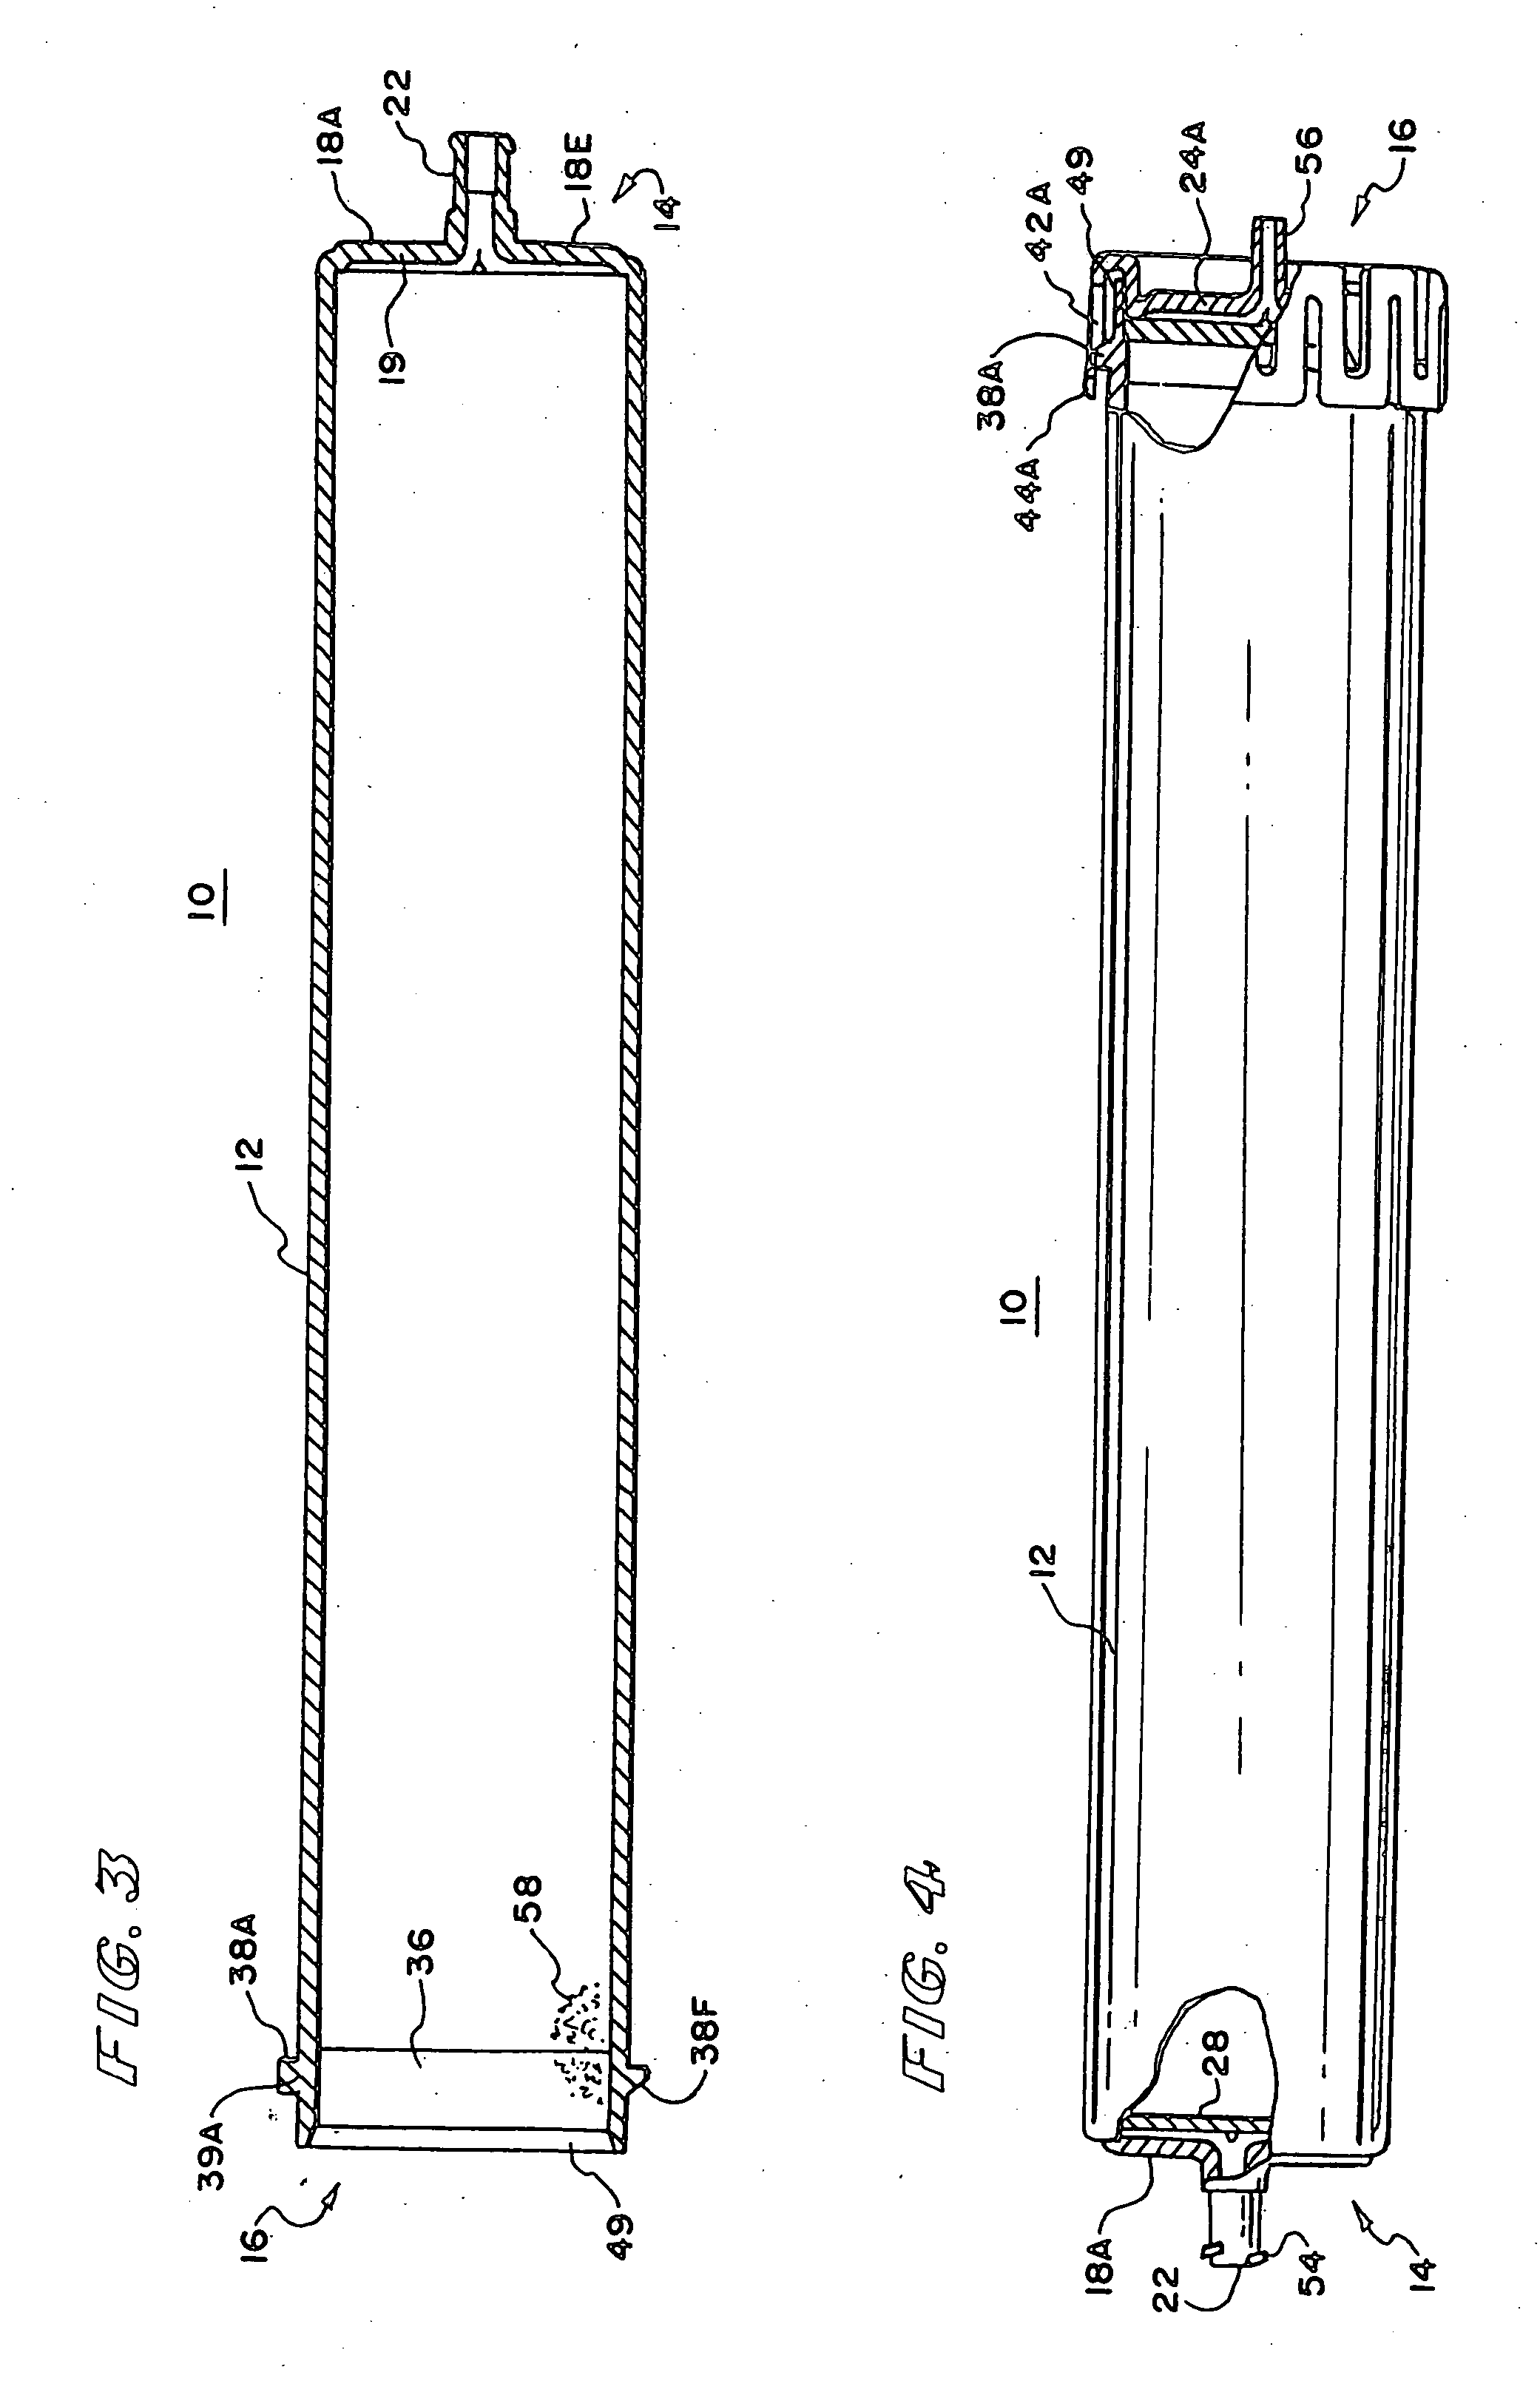 Disposable chromatographic columns